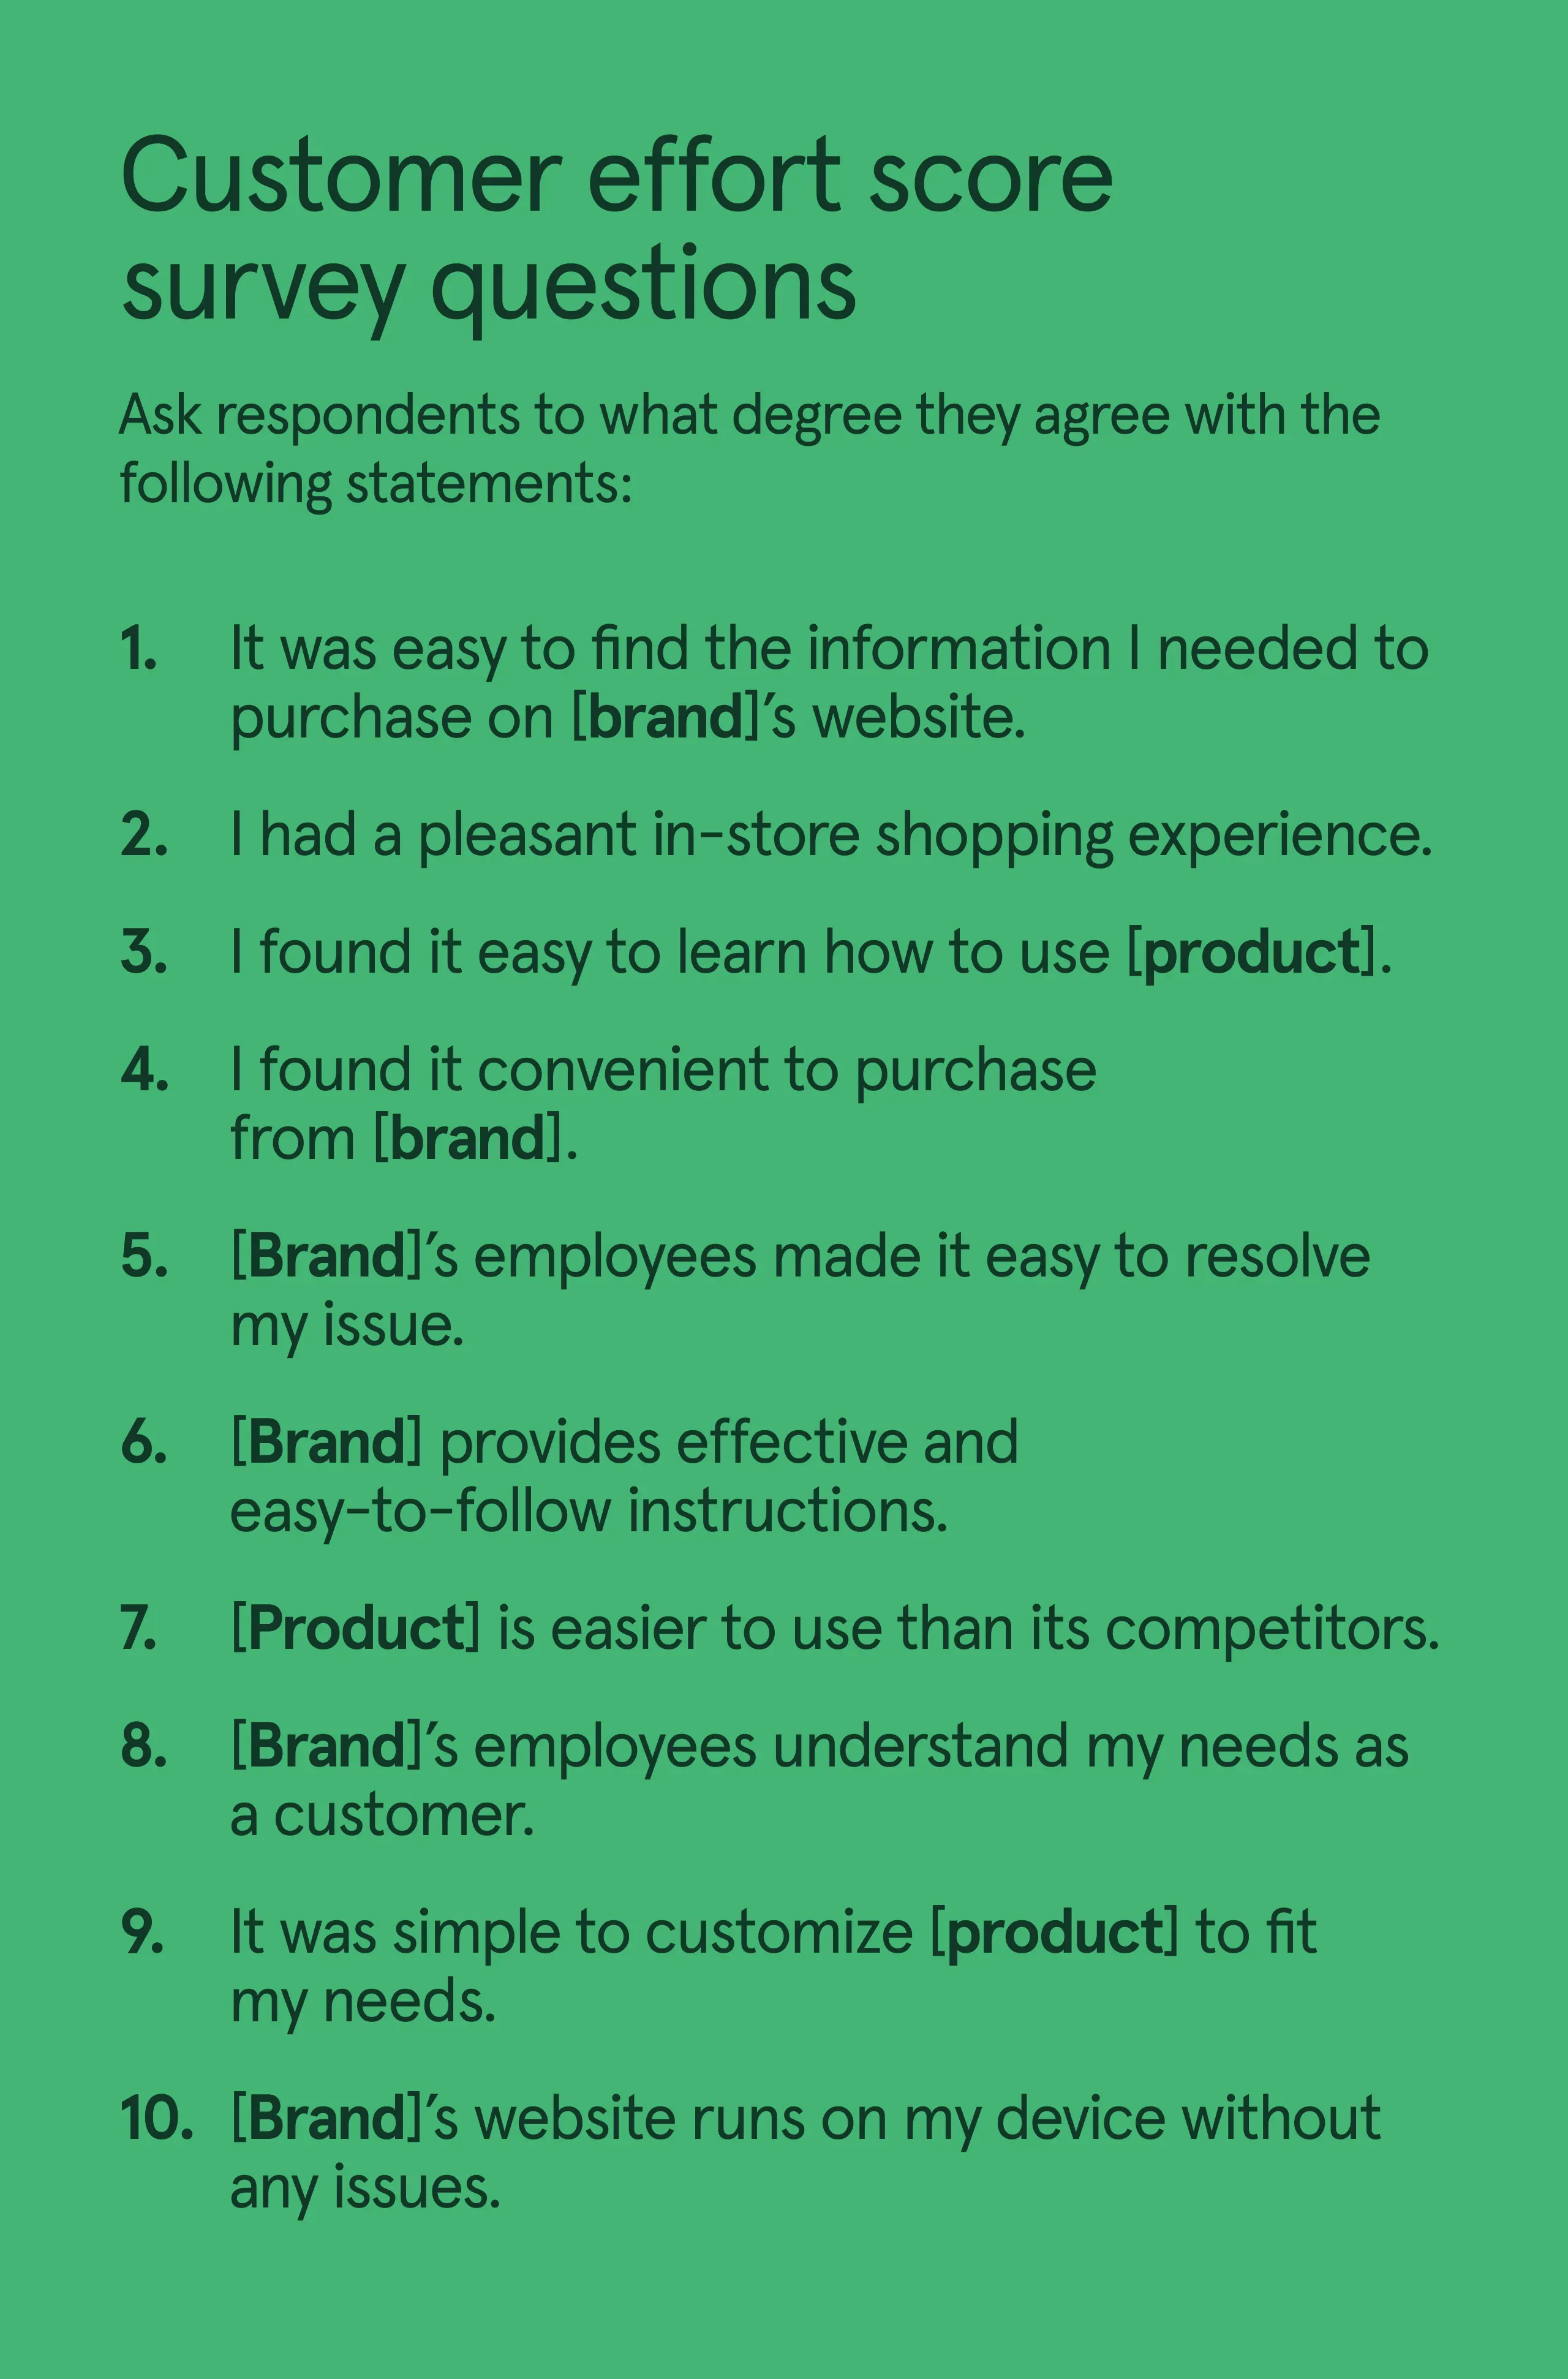 List of 10 customer effort score survey question examples.